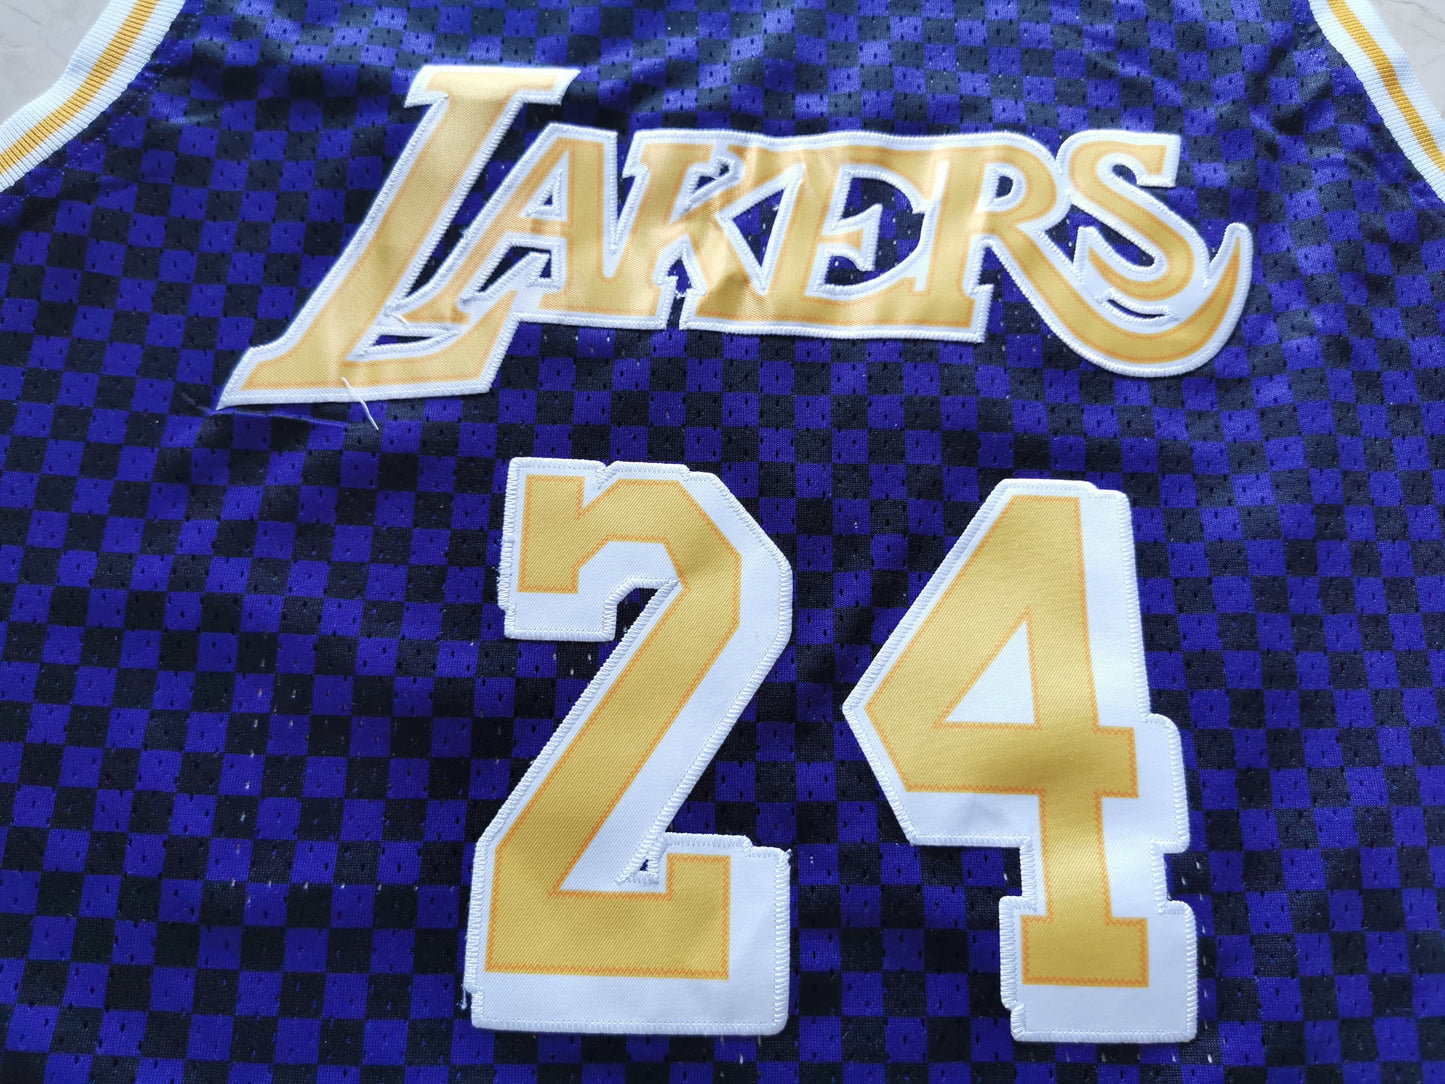 Kobe Bryant Los Angeles Lakers #24 NBA Classics Authentisches Trikot – Retro Lila